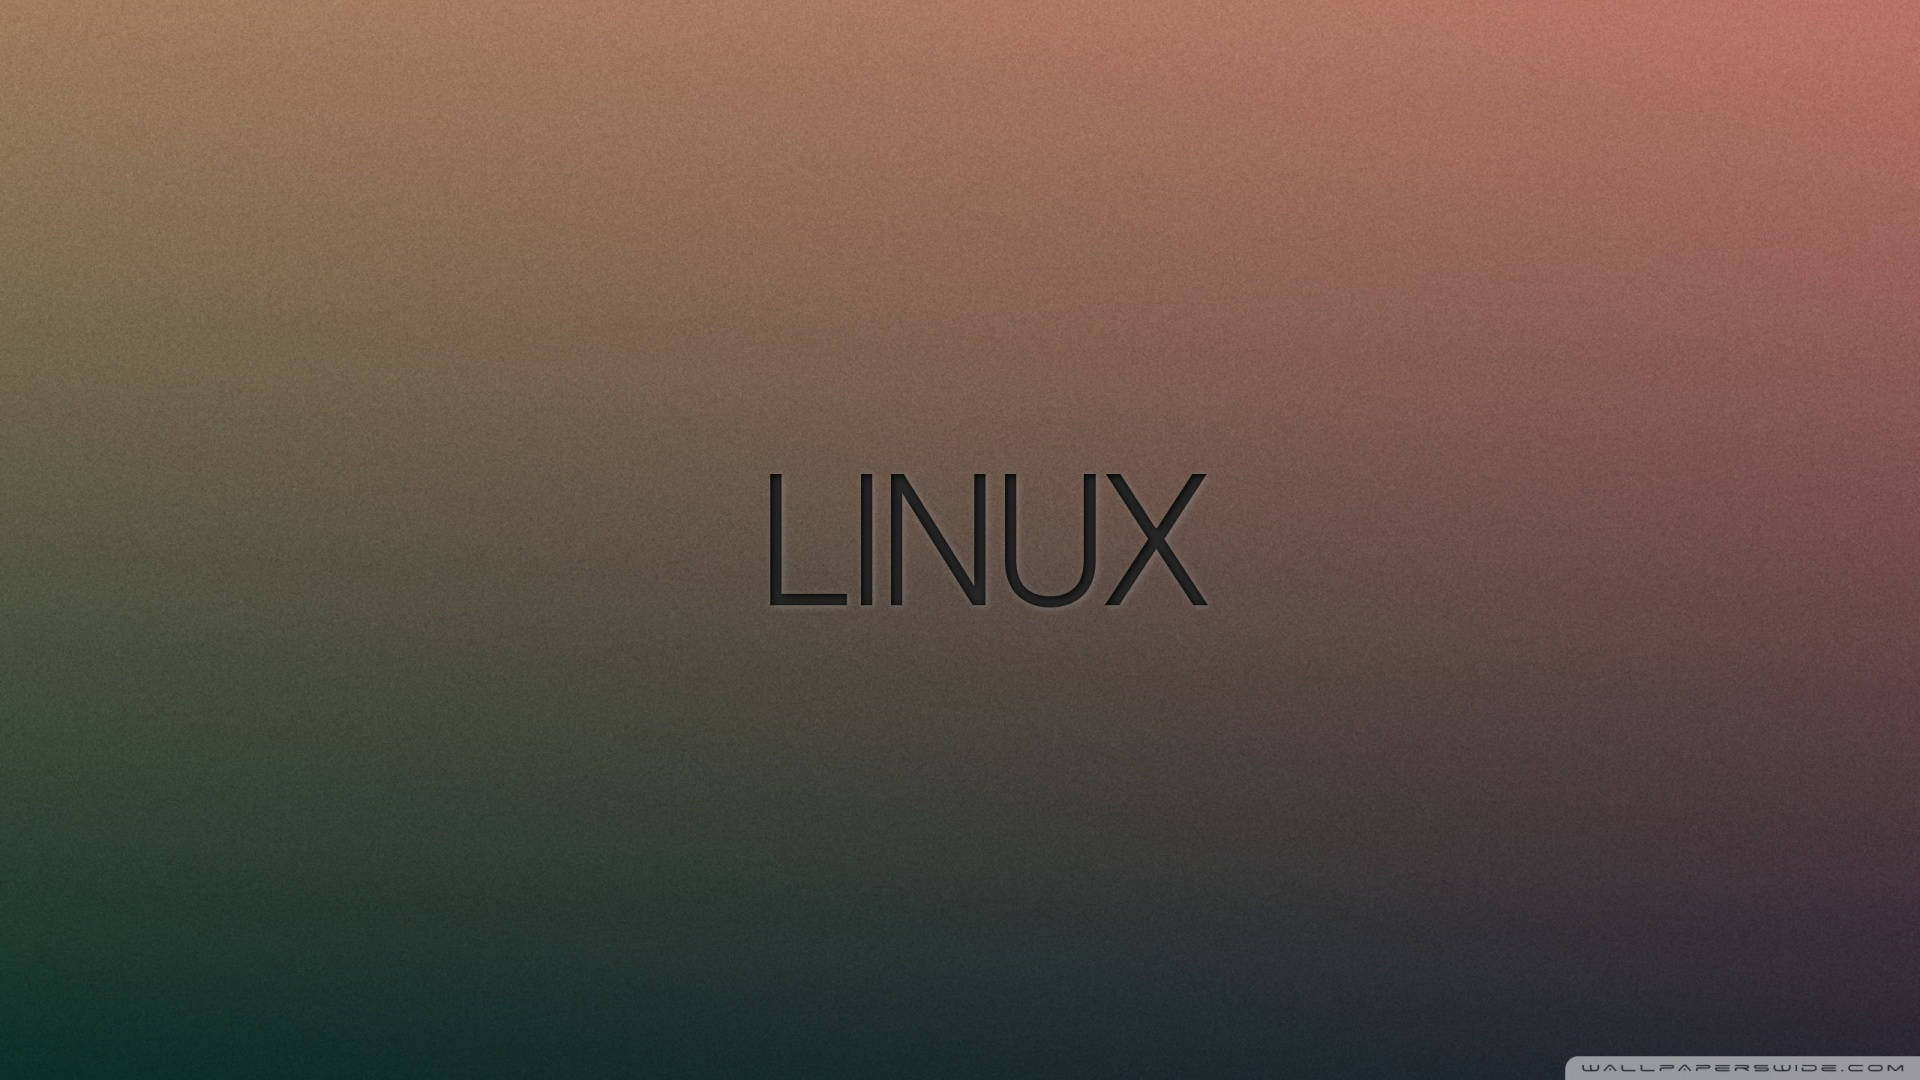 Minimalist Linux Gradient Background